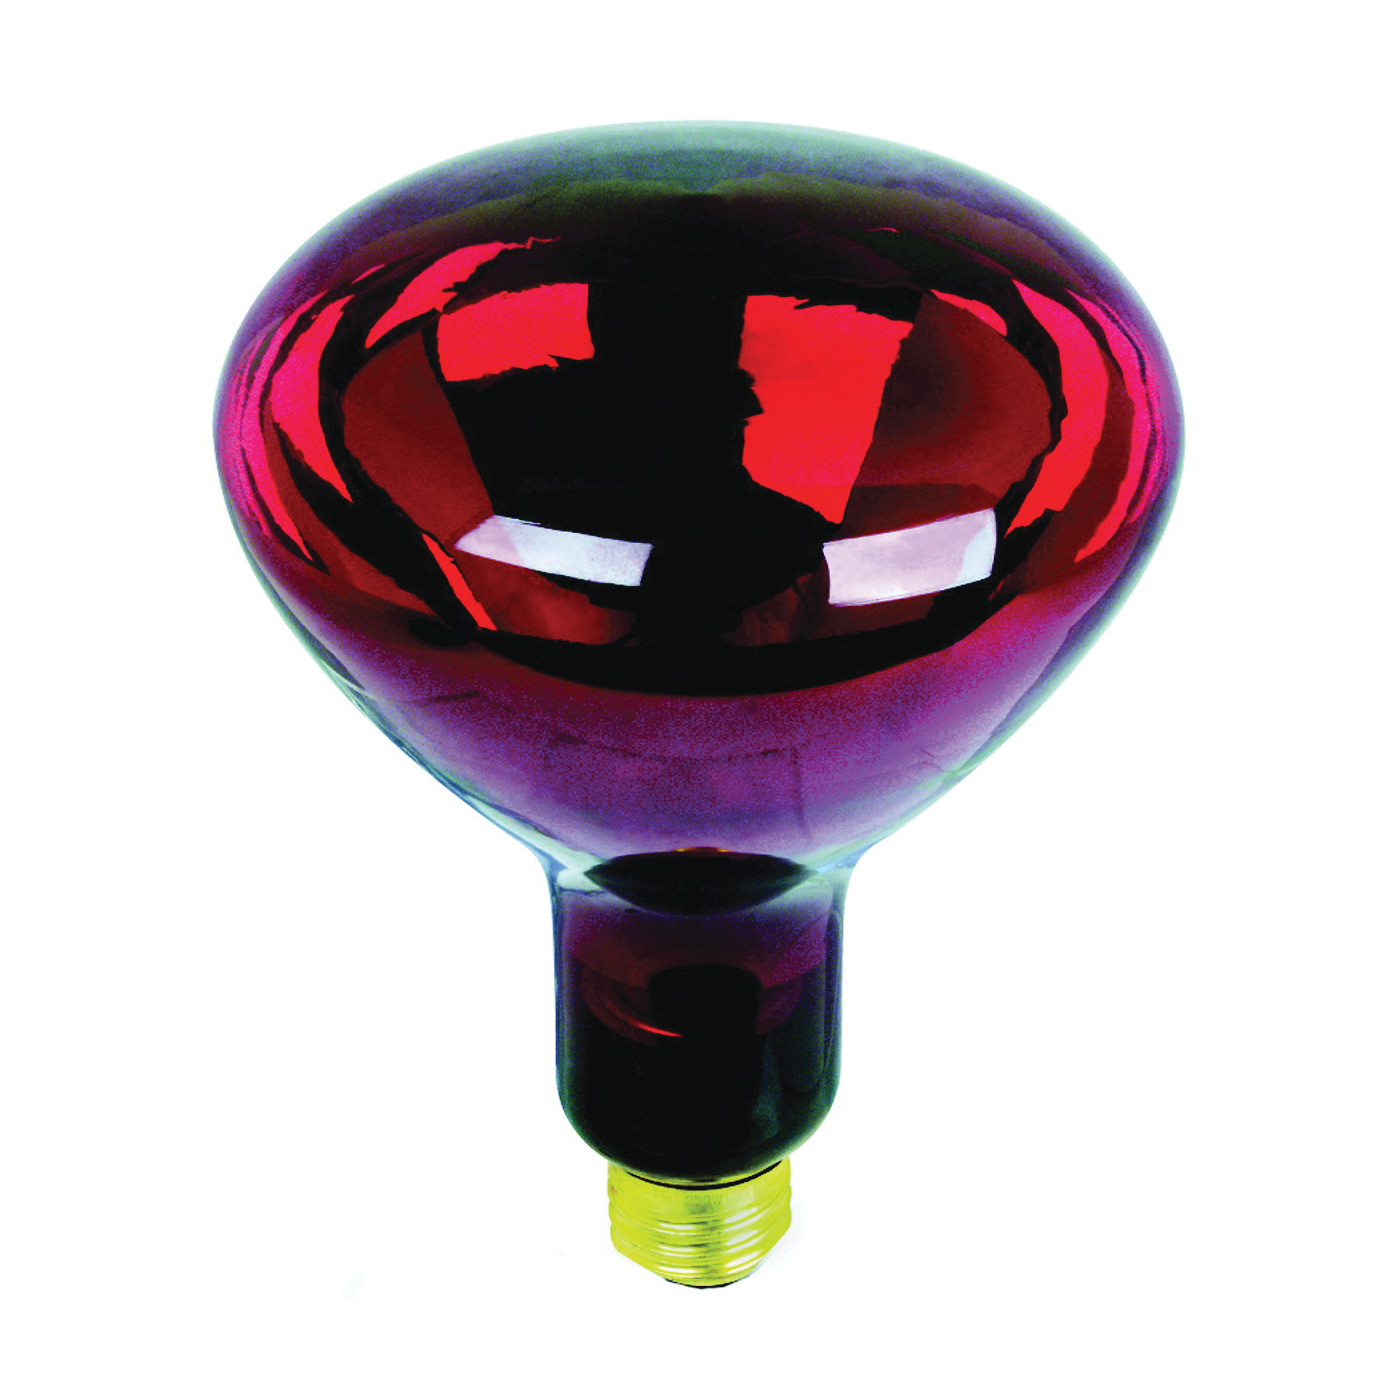 250R40/R Incandescent Lamp, 250 W, R40 Lamp, Medium E26 Lamp Base, 2700 K Color Temp, 2000 hr Average Life